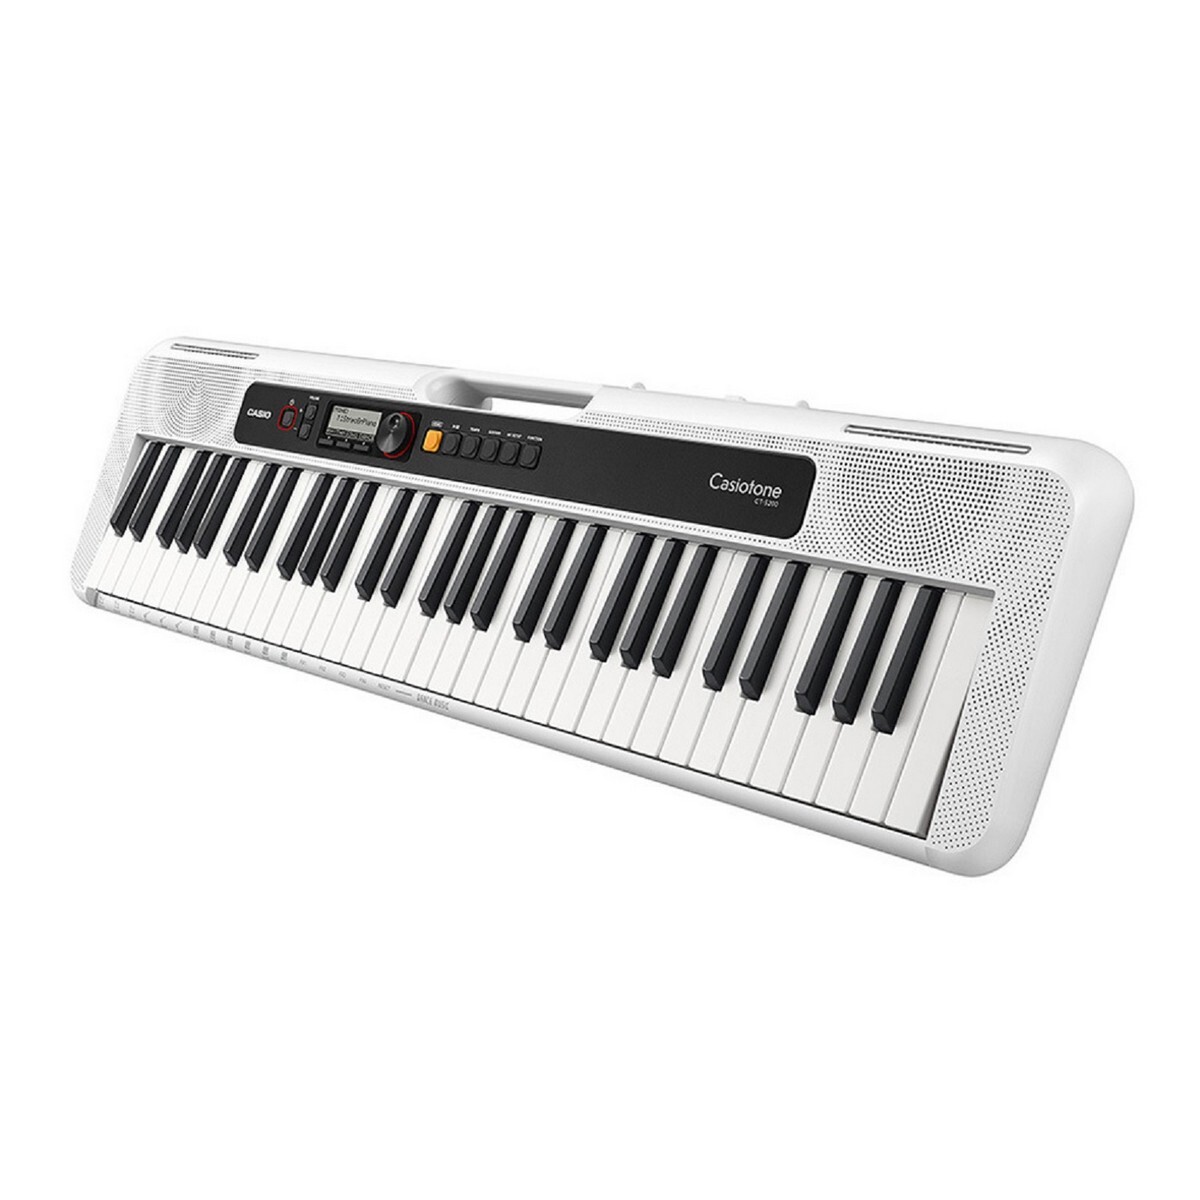 Casio Organ CT-S200 WE +LAD6 Standard Keyboards